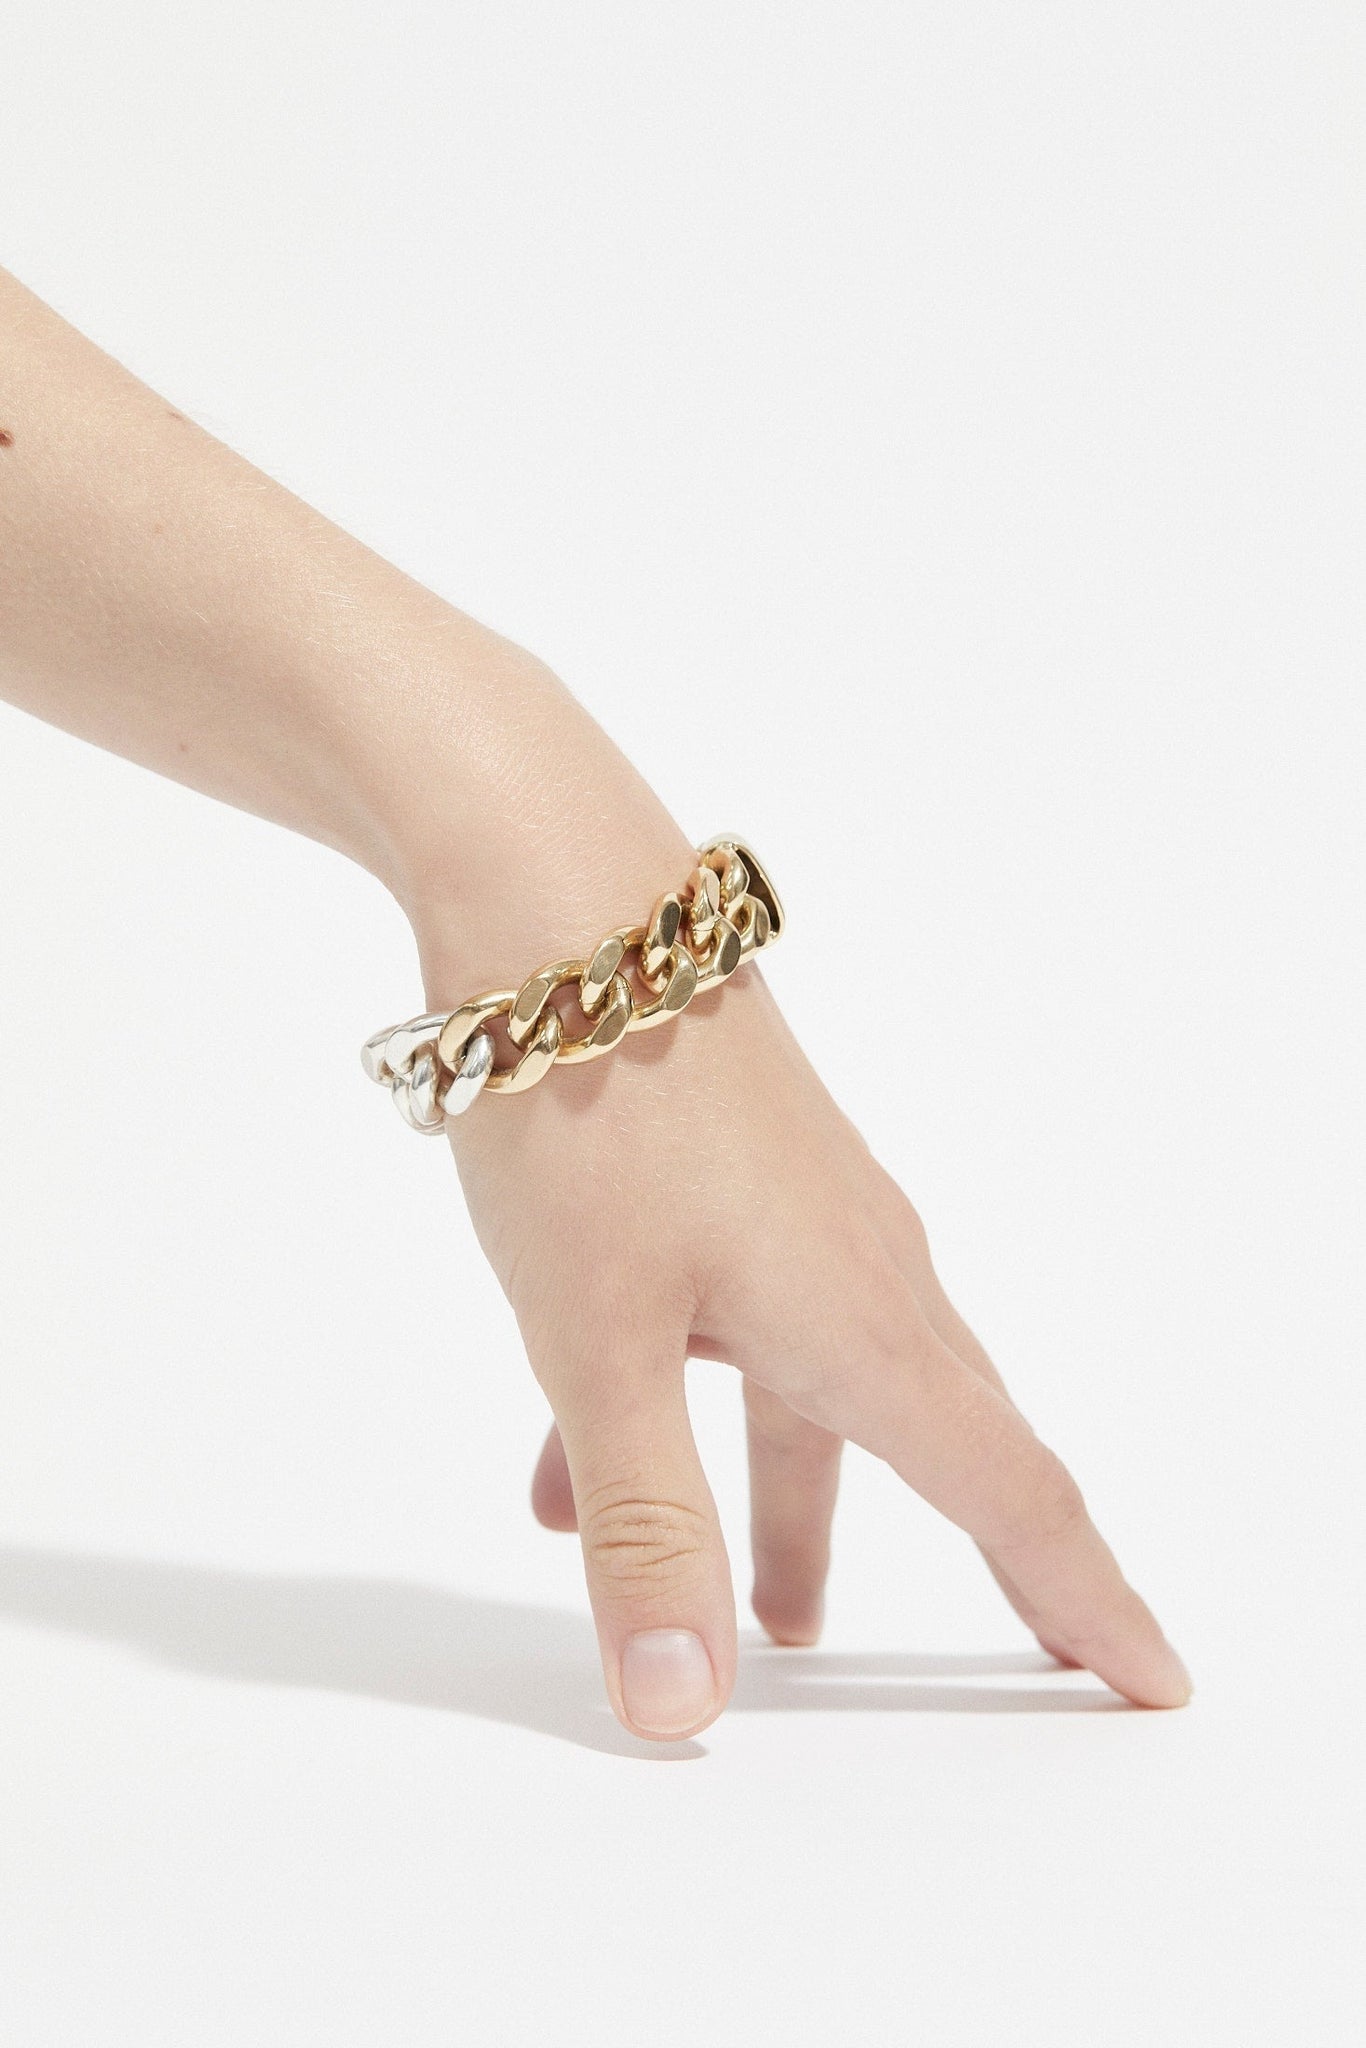 Molded Chain Bracelet Maxi - Bracelets - Cornelia Webb - 2